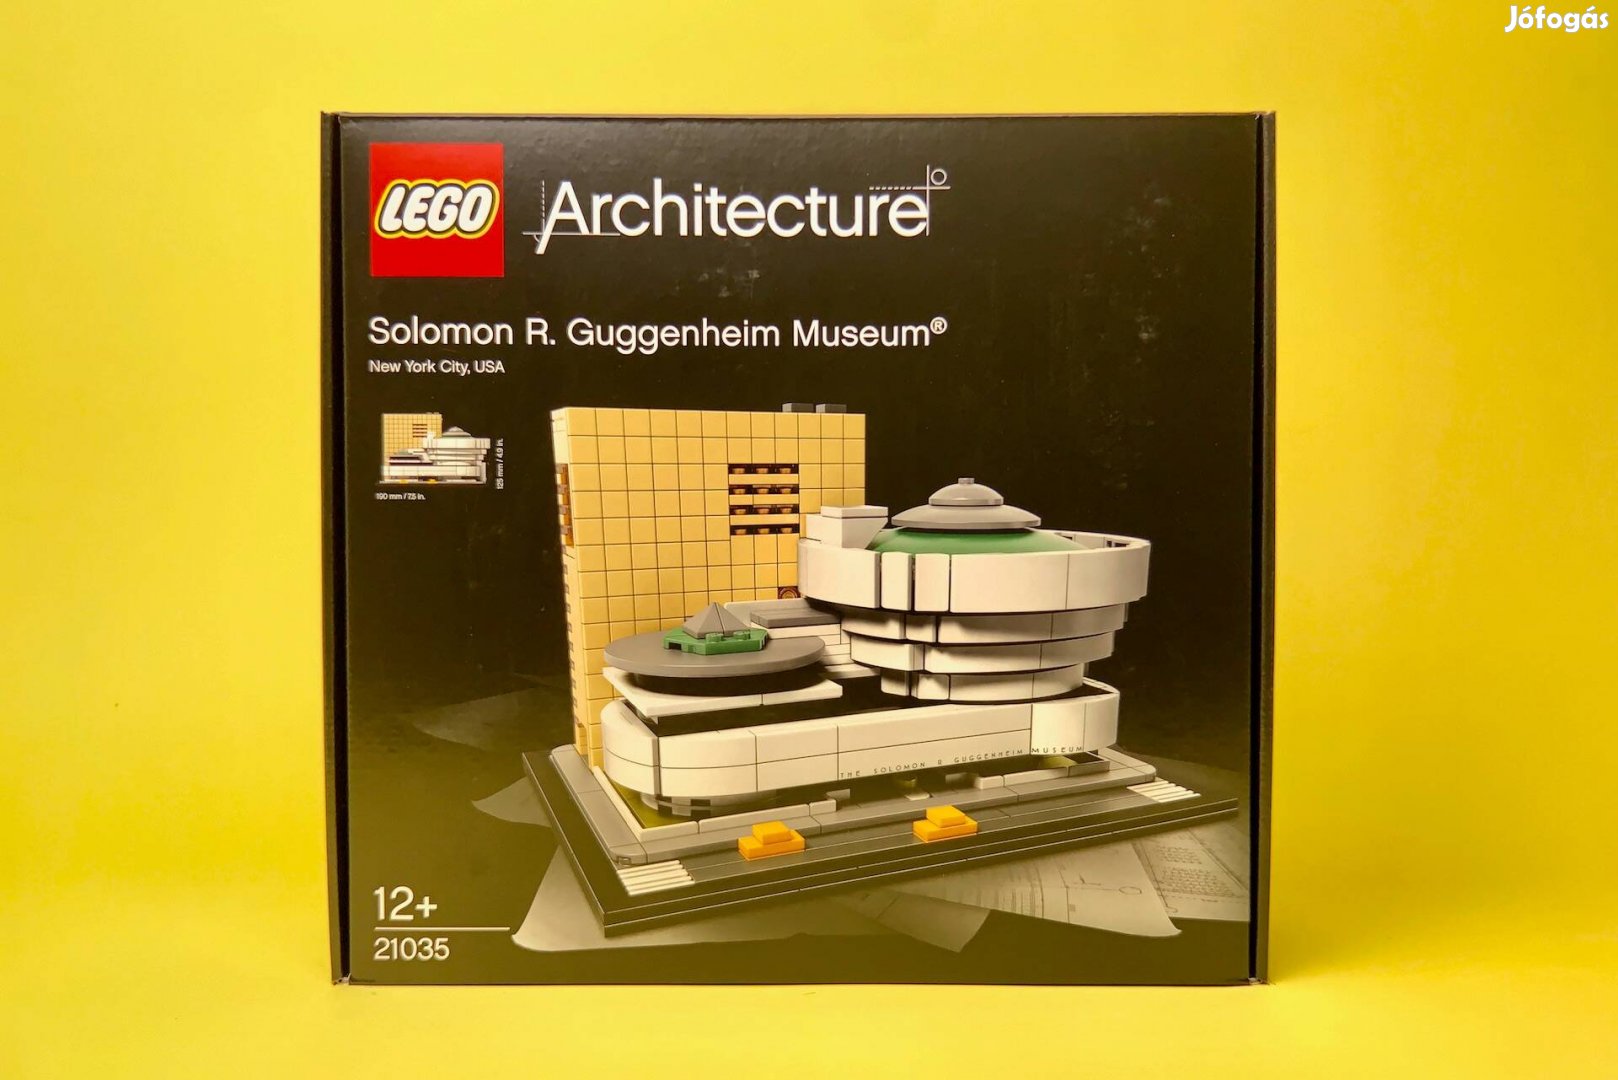 LEGO Architecture 21035 Solomon R. Guggenheim múzeum, Uj, Bontatlan